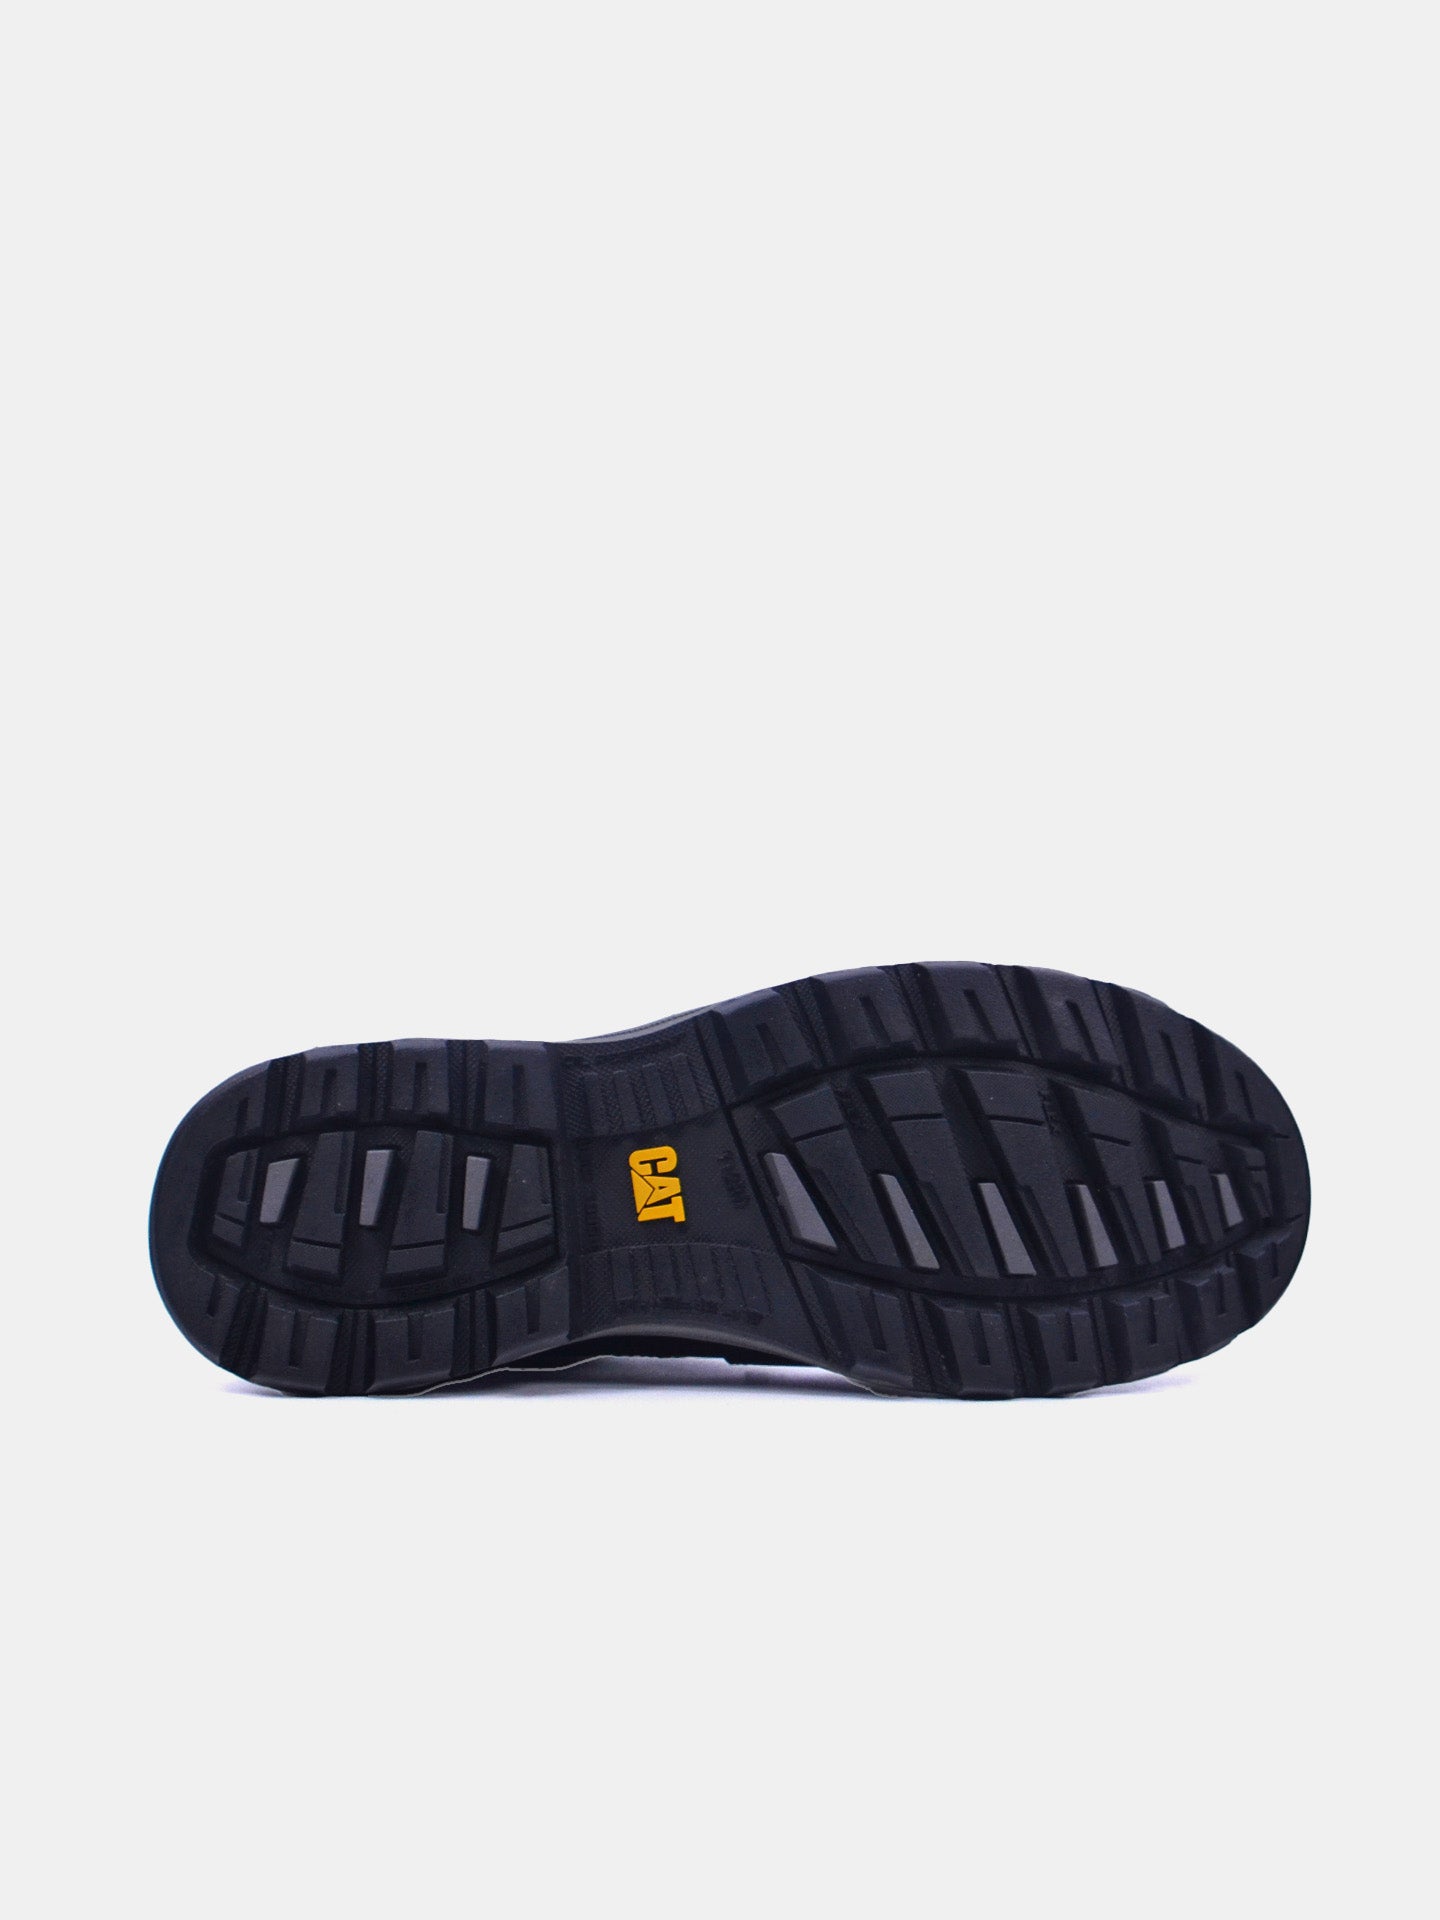 Caterpillar Women's Preset Nano Toe SP1 Safety Shoes